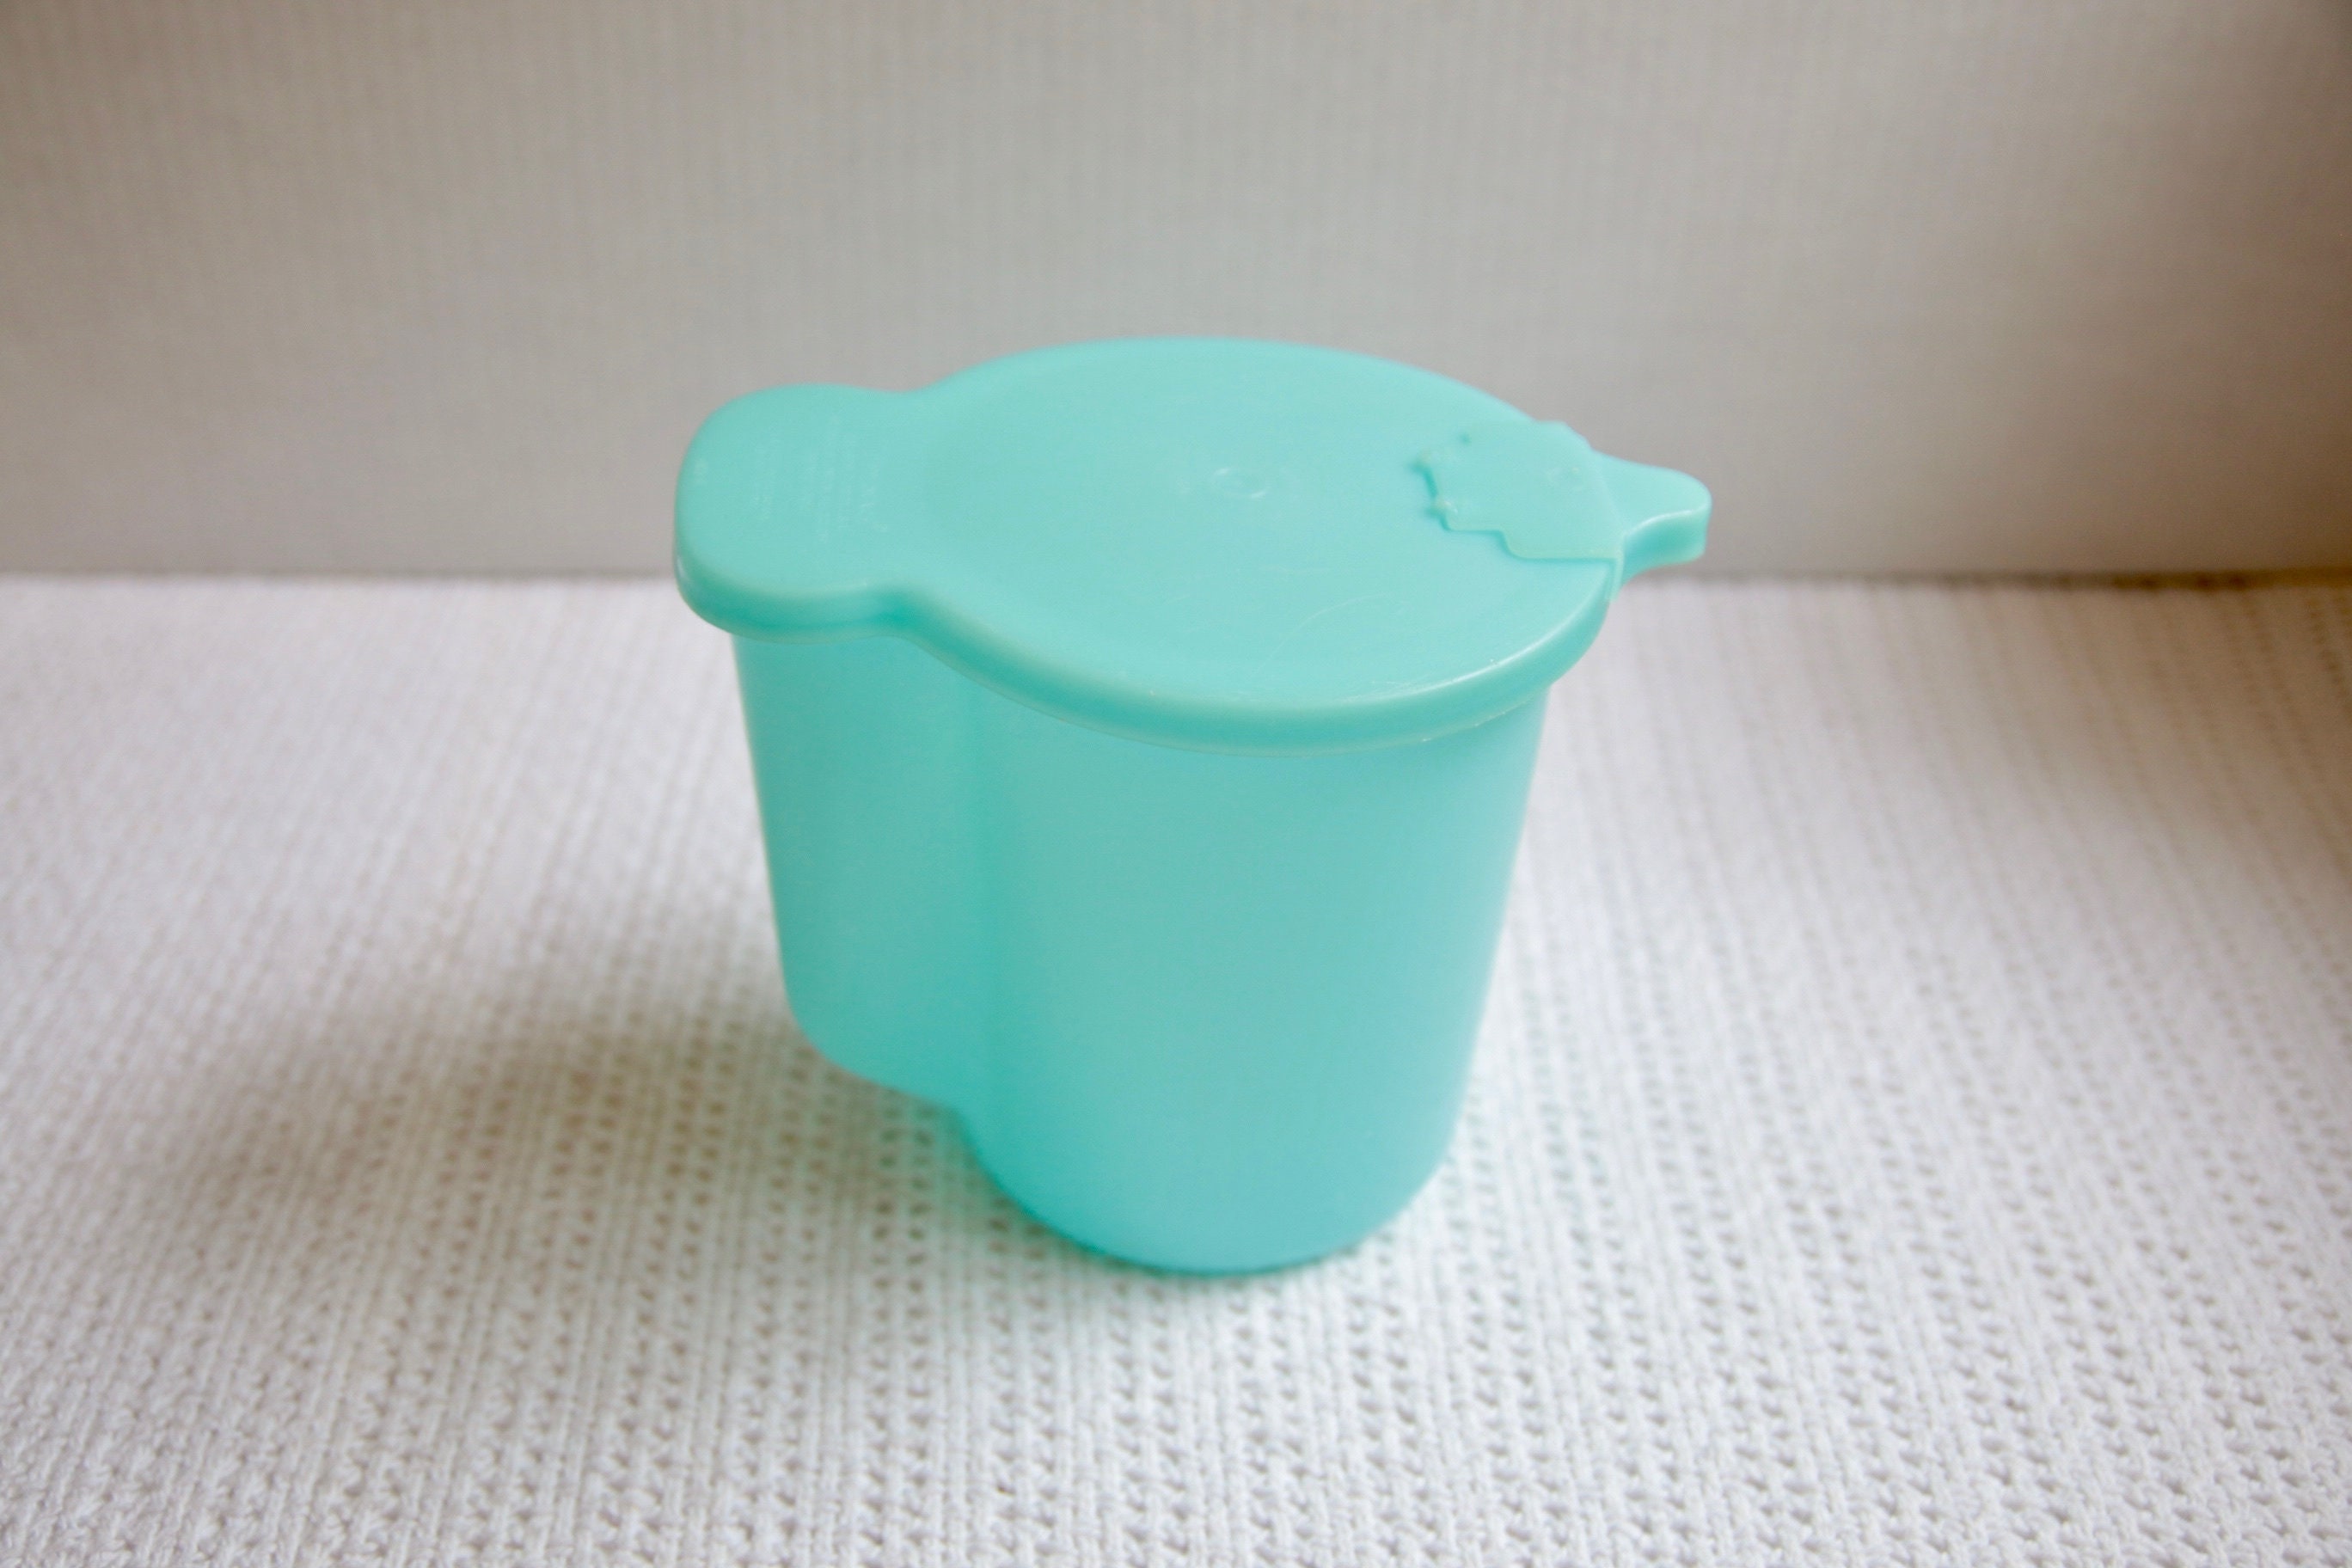 Tupperware Creamer Pouring Container Jug Milk Juice Pot 1209-5